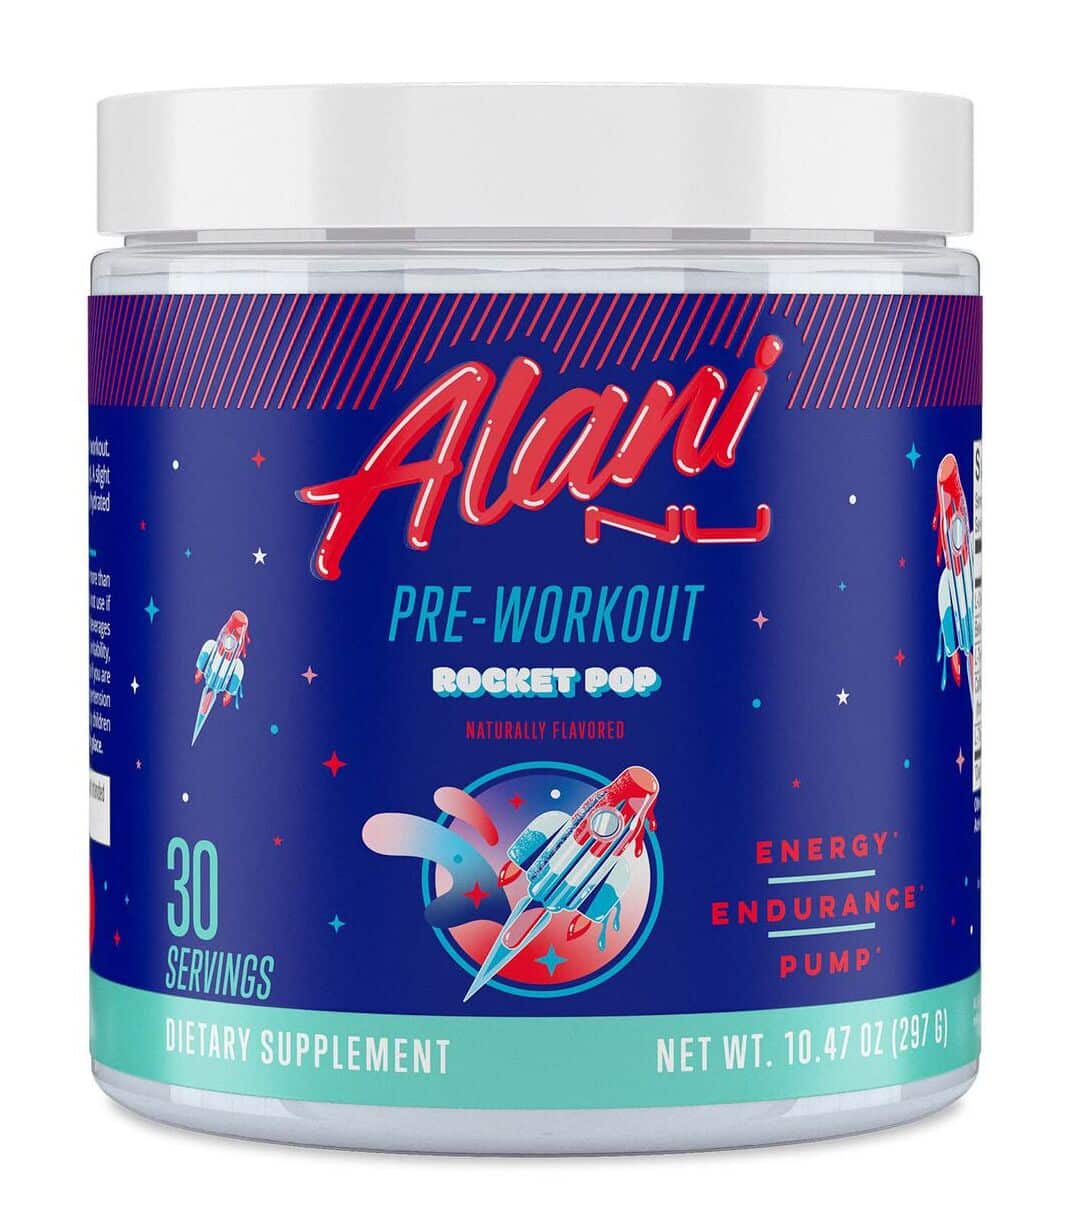 Alani Nu Pre-Workout Supplement